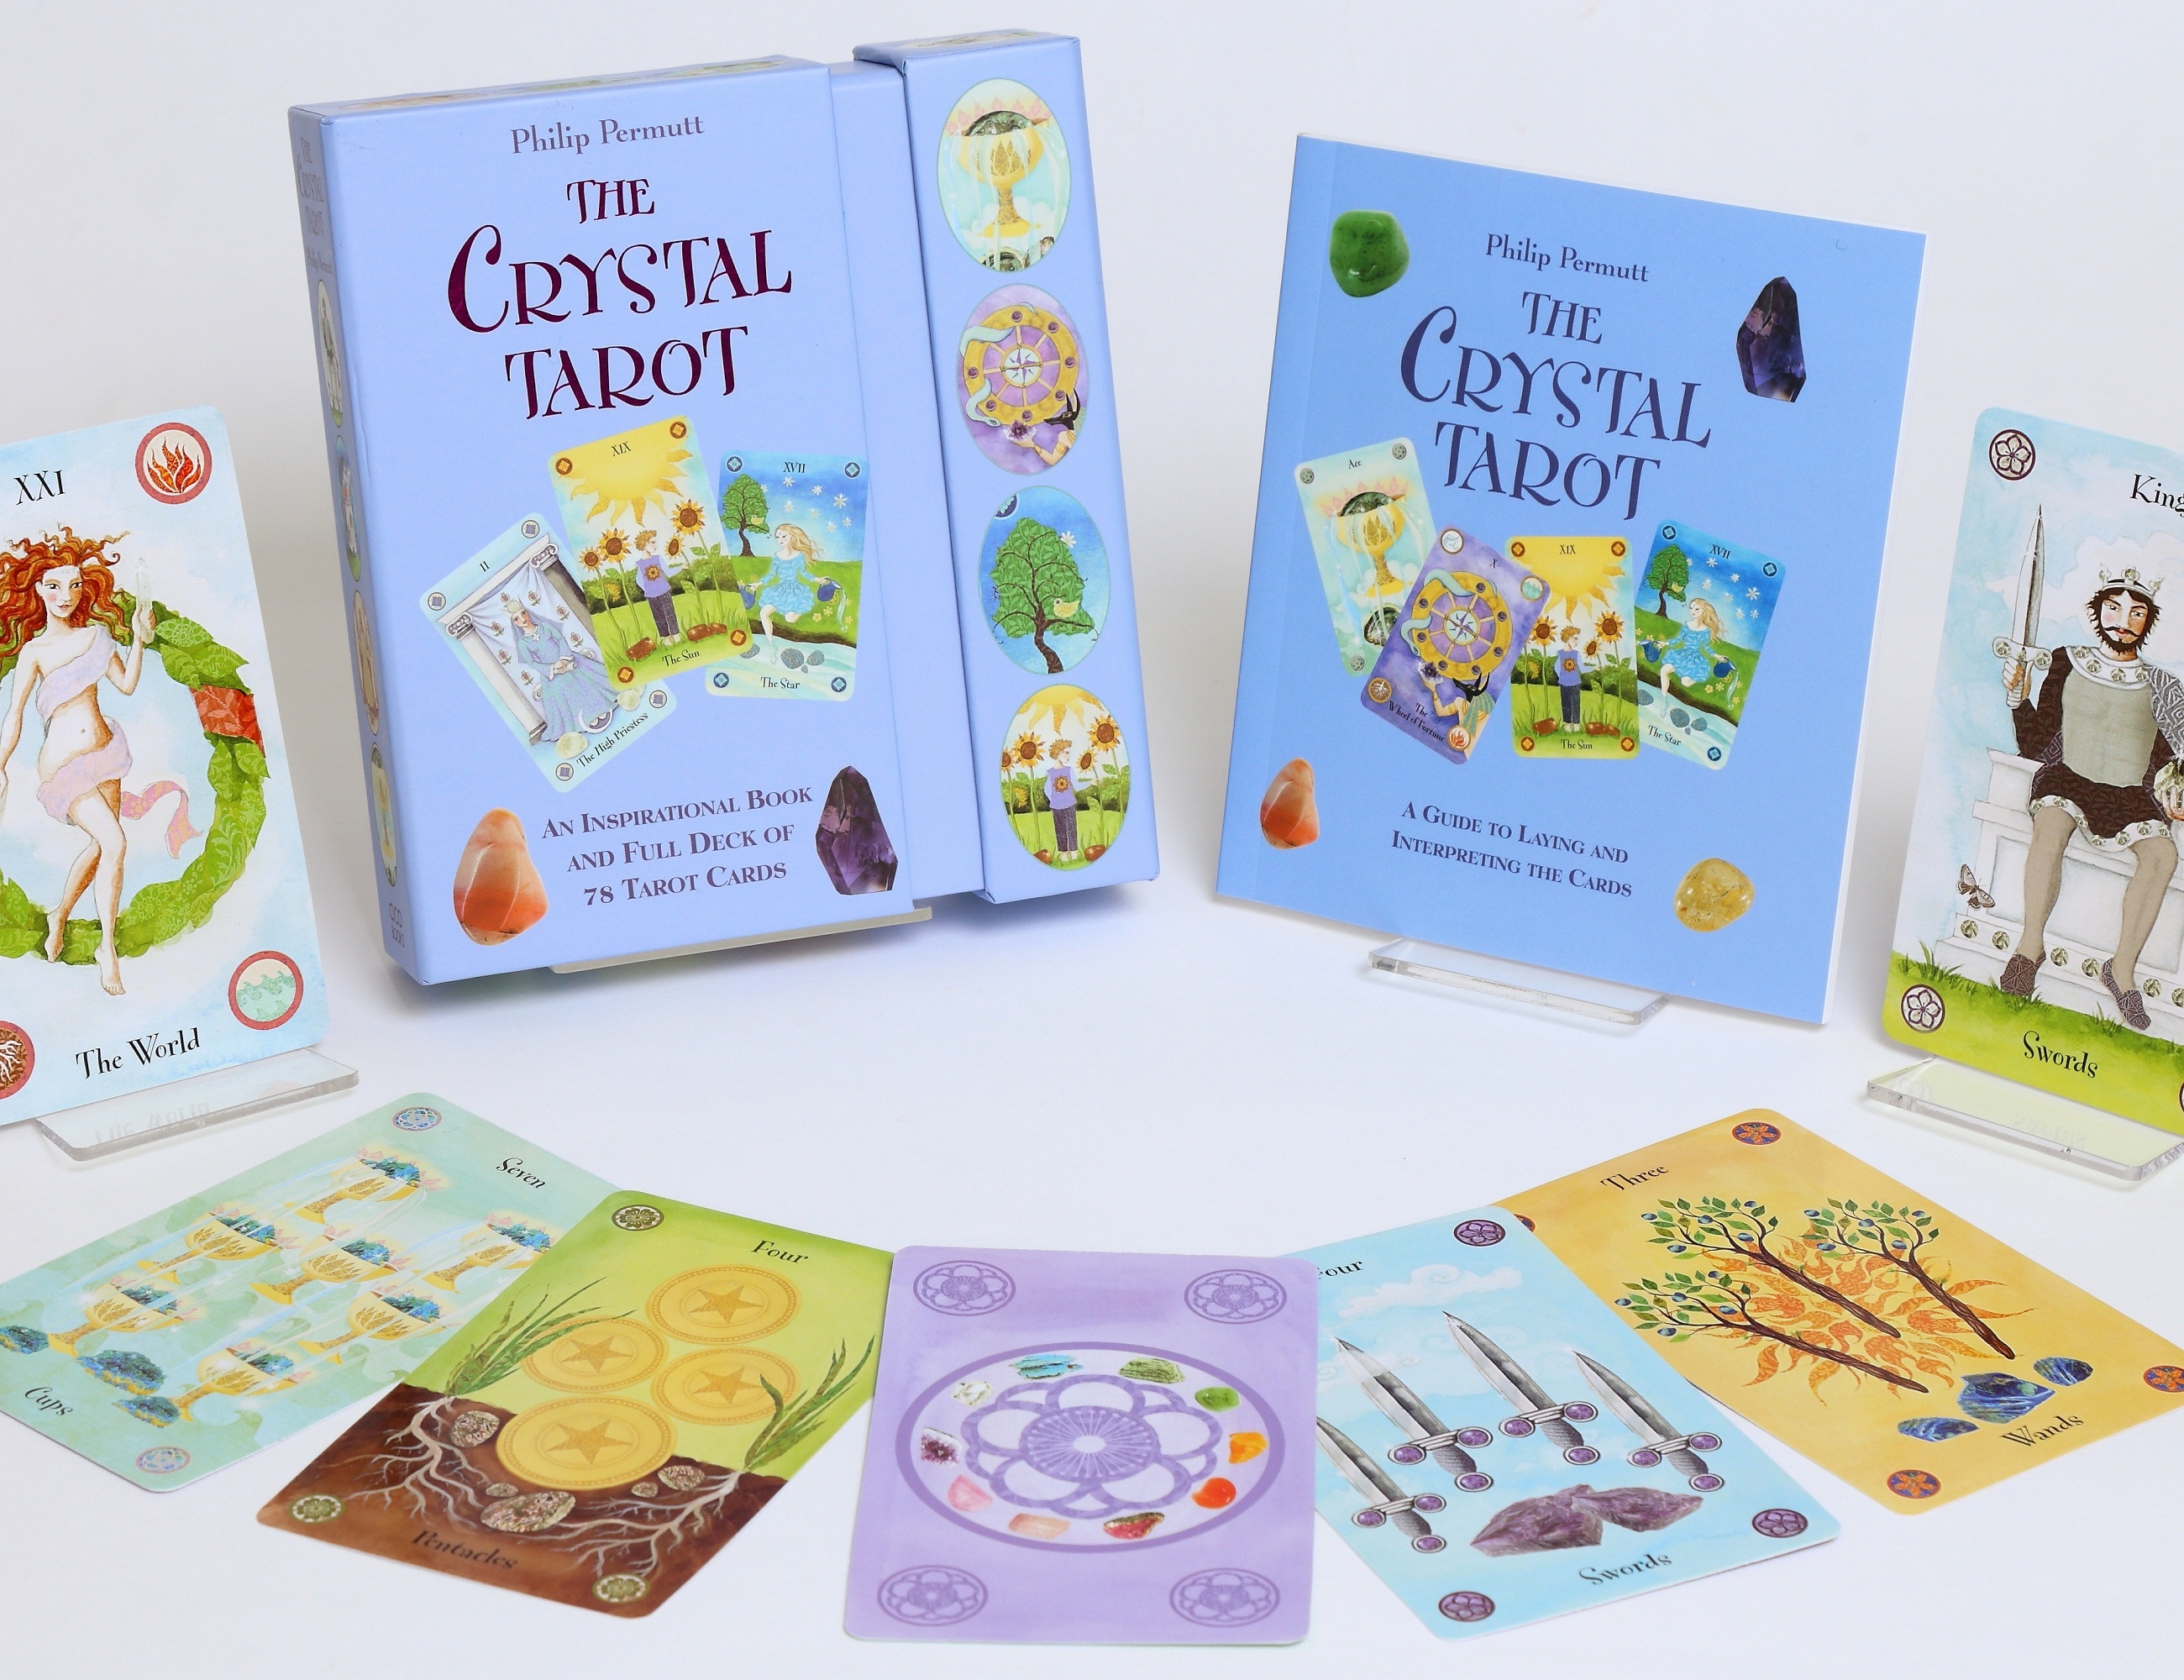 The Crystal Tarot